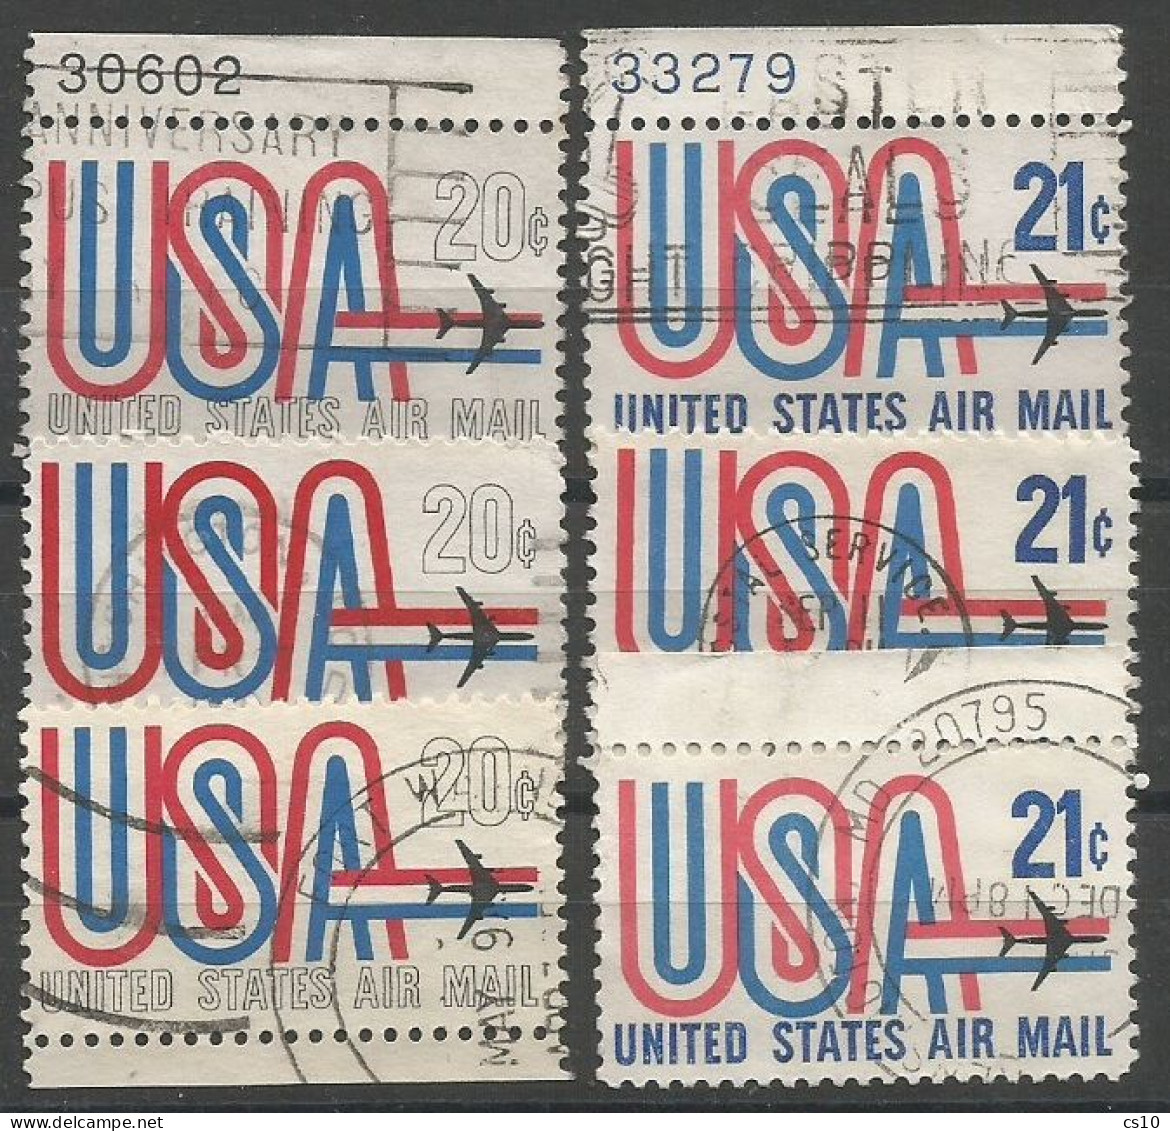 USA Ribbon Airmail 1968/73 SC.# C75+C81 . #2 With Plate  Number + # VFU Circular PMk + #2 Sheet Margin - Plattennummern